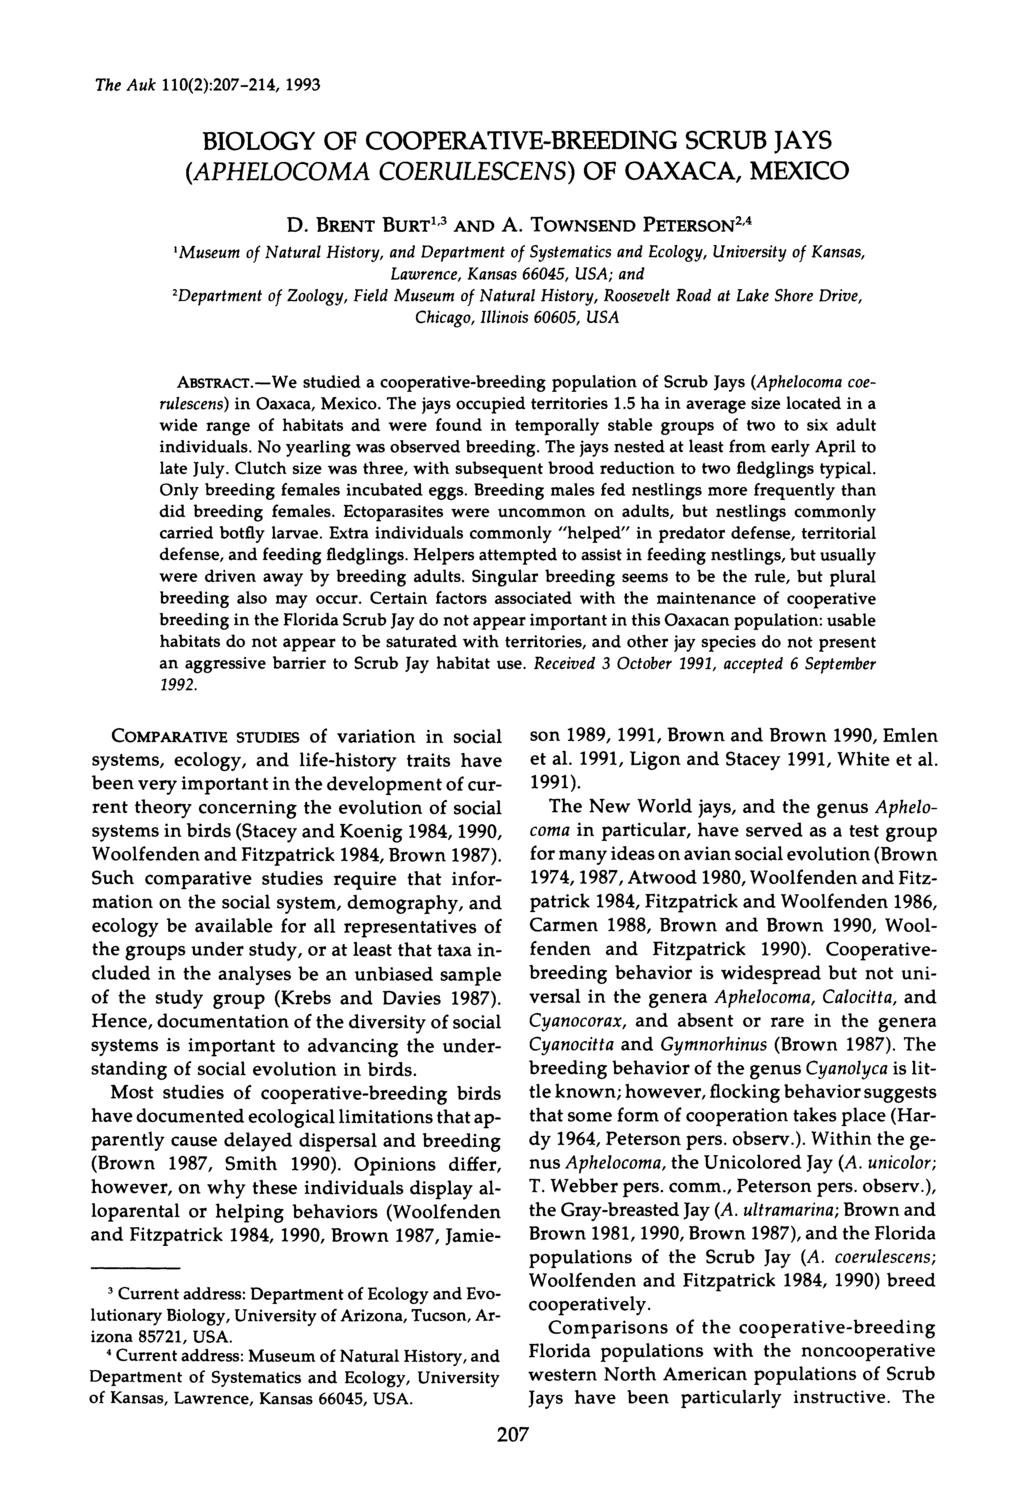 The Auk 110(2):207-214, 1993 BIOLOGY OF COOPERATIVE-BREEDING SCRUB JAYS (APHELOCOMA COERULESCENS) OF OAXACA, MEXICO D. BRENT BURT1'3 AND A.